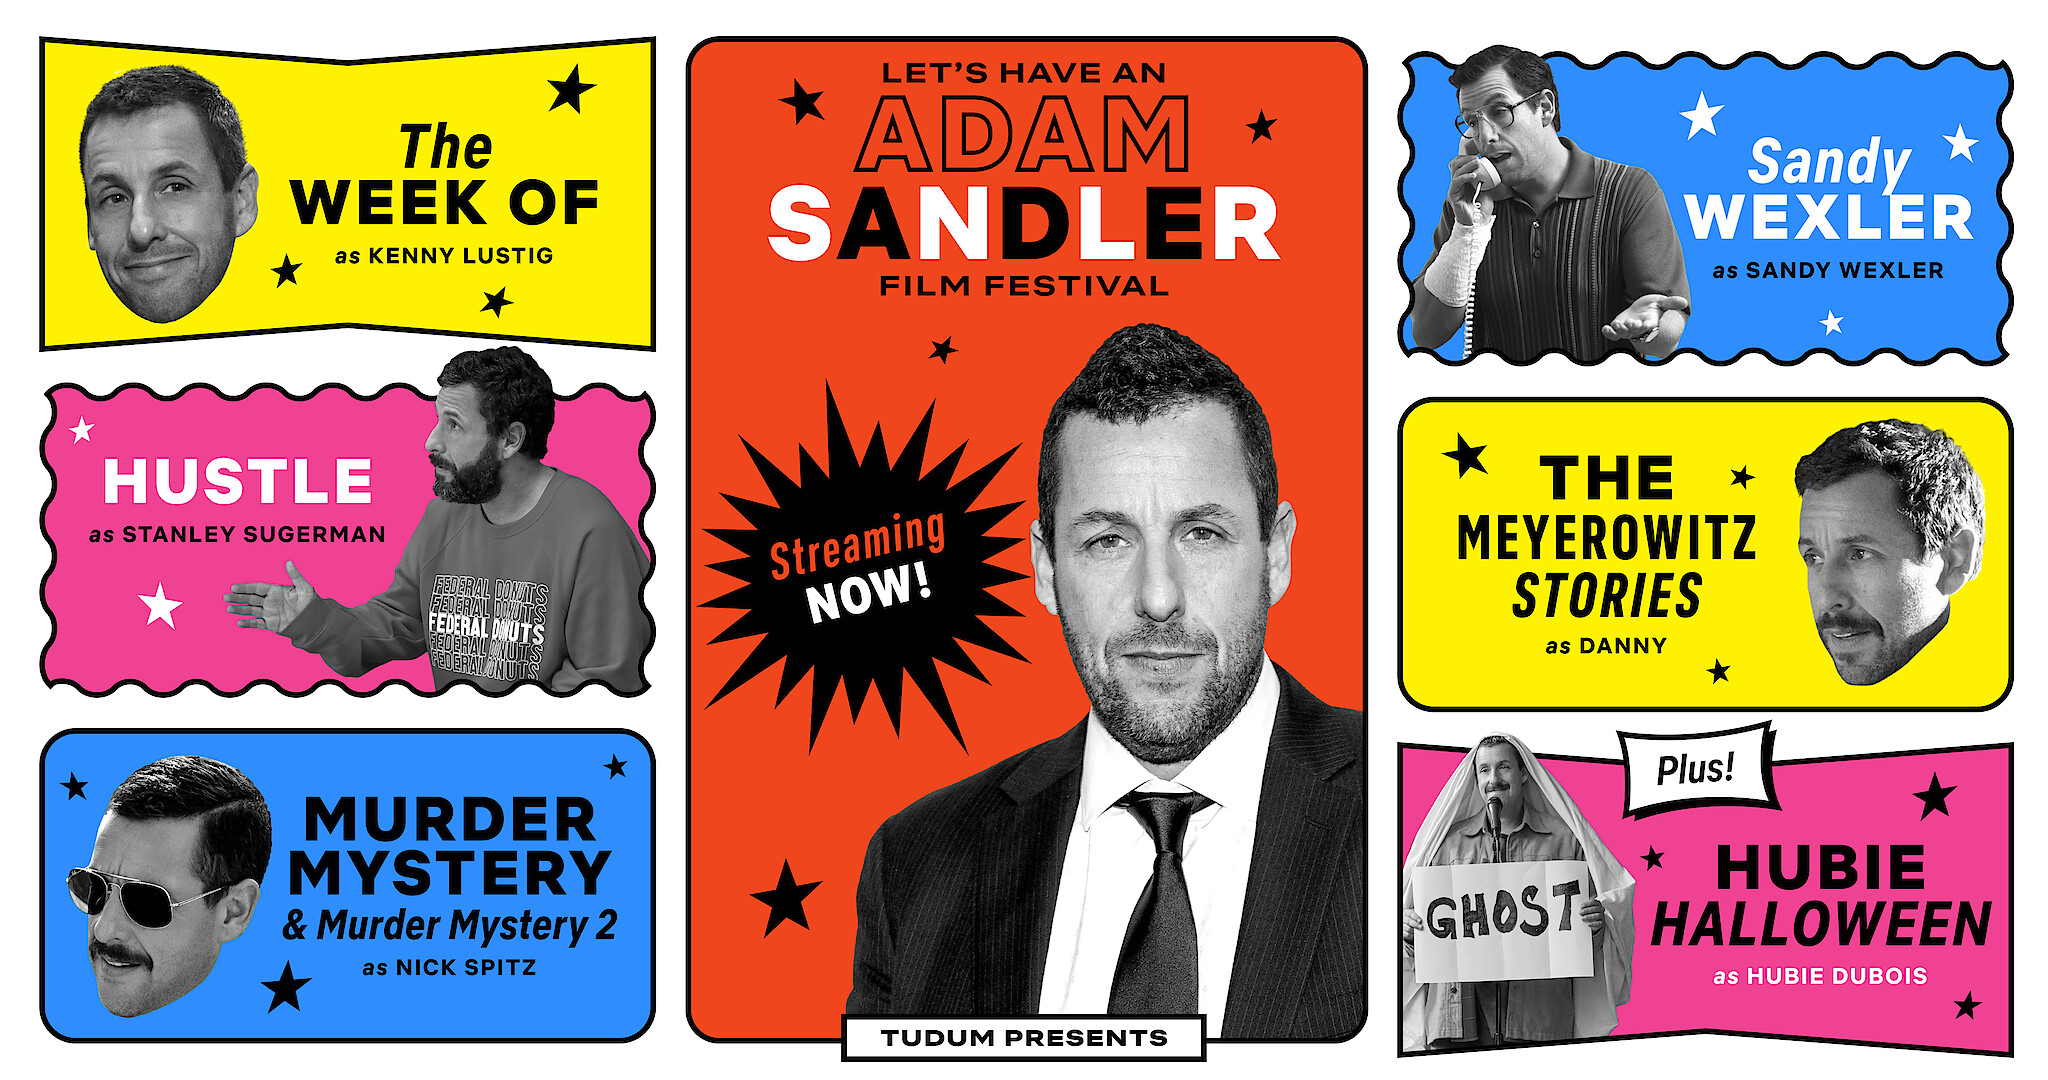 What Adam Sandler Movies Are on Netflix?